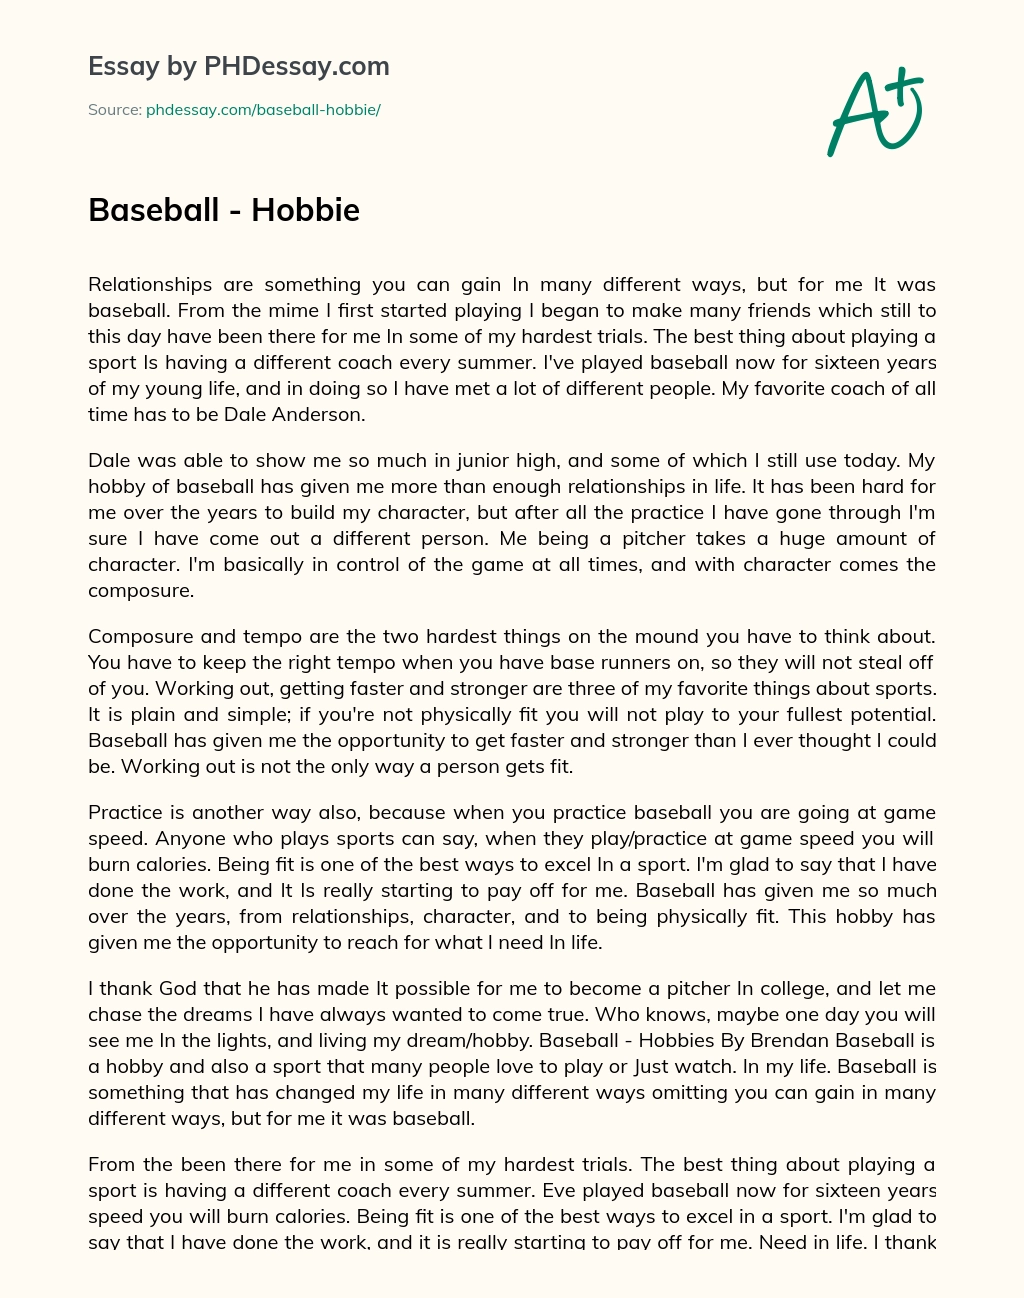 Baseball – Hobbie essay